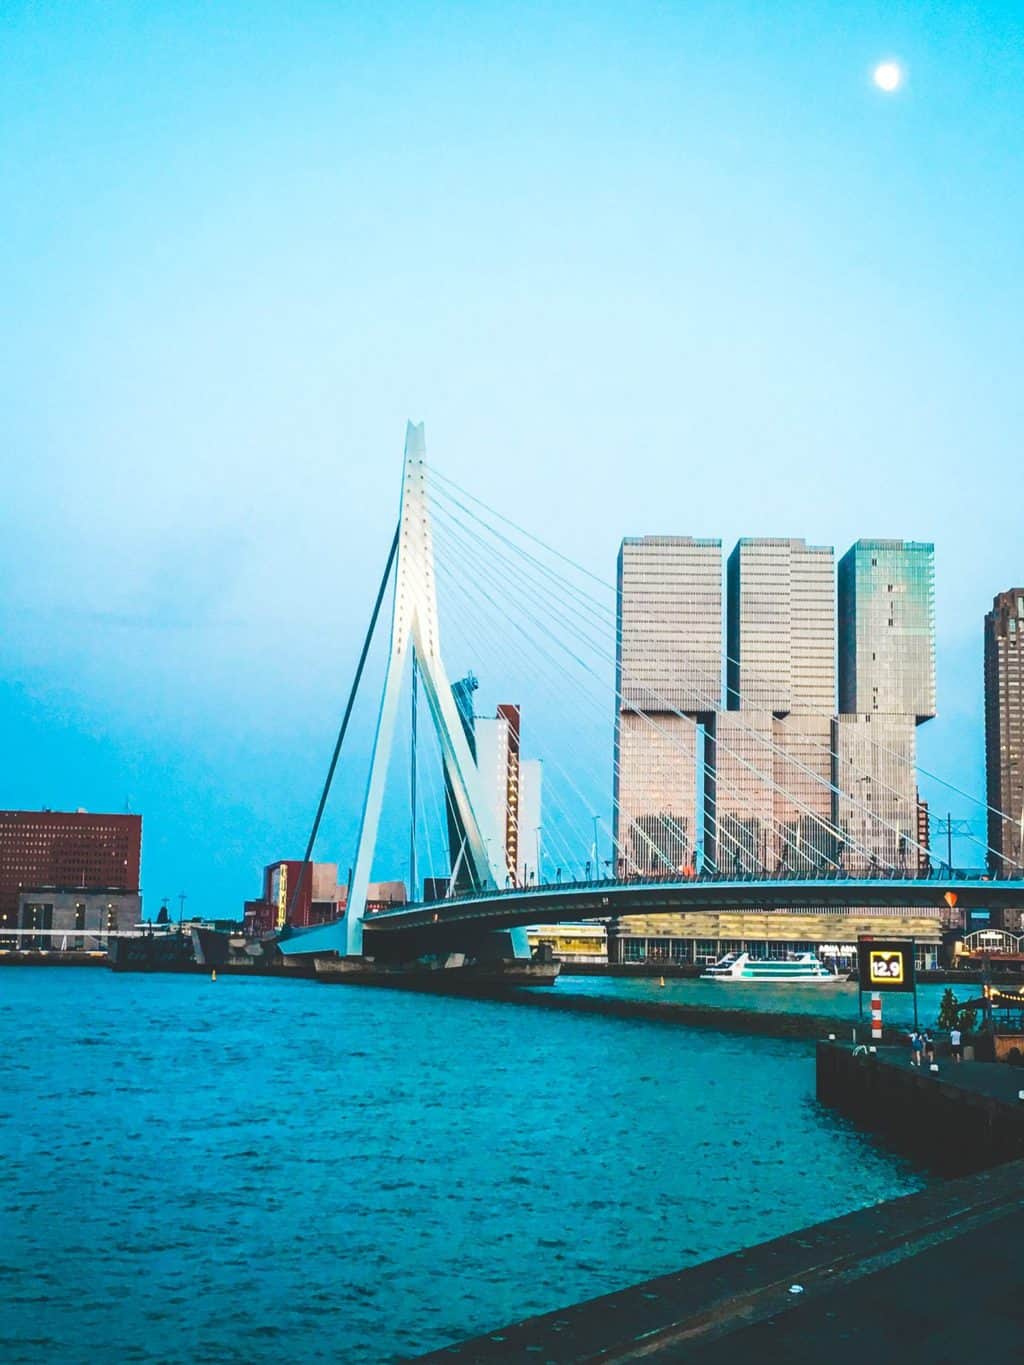 Rotterdam Travel Guide